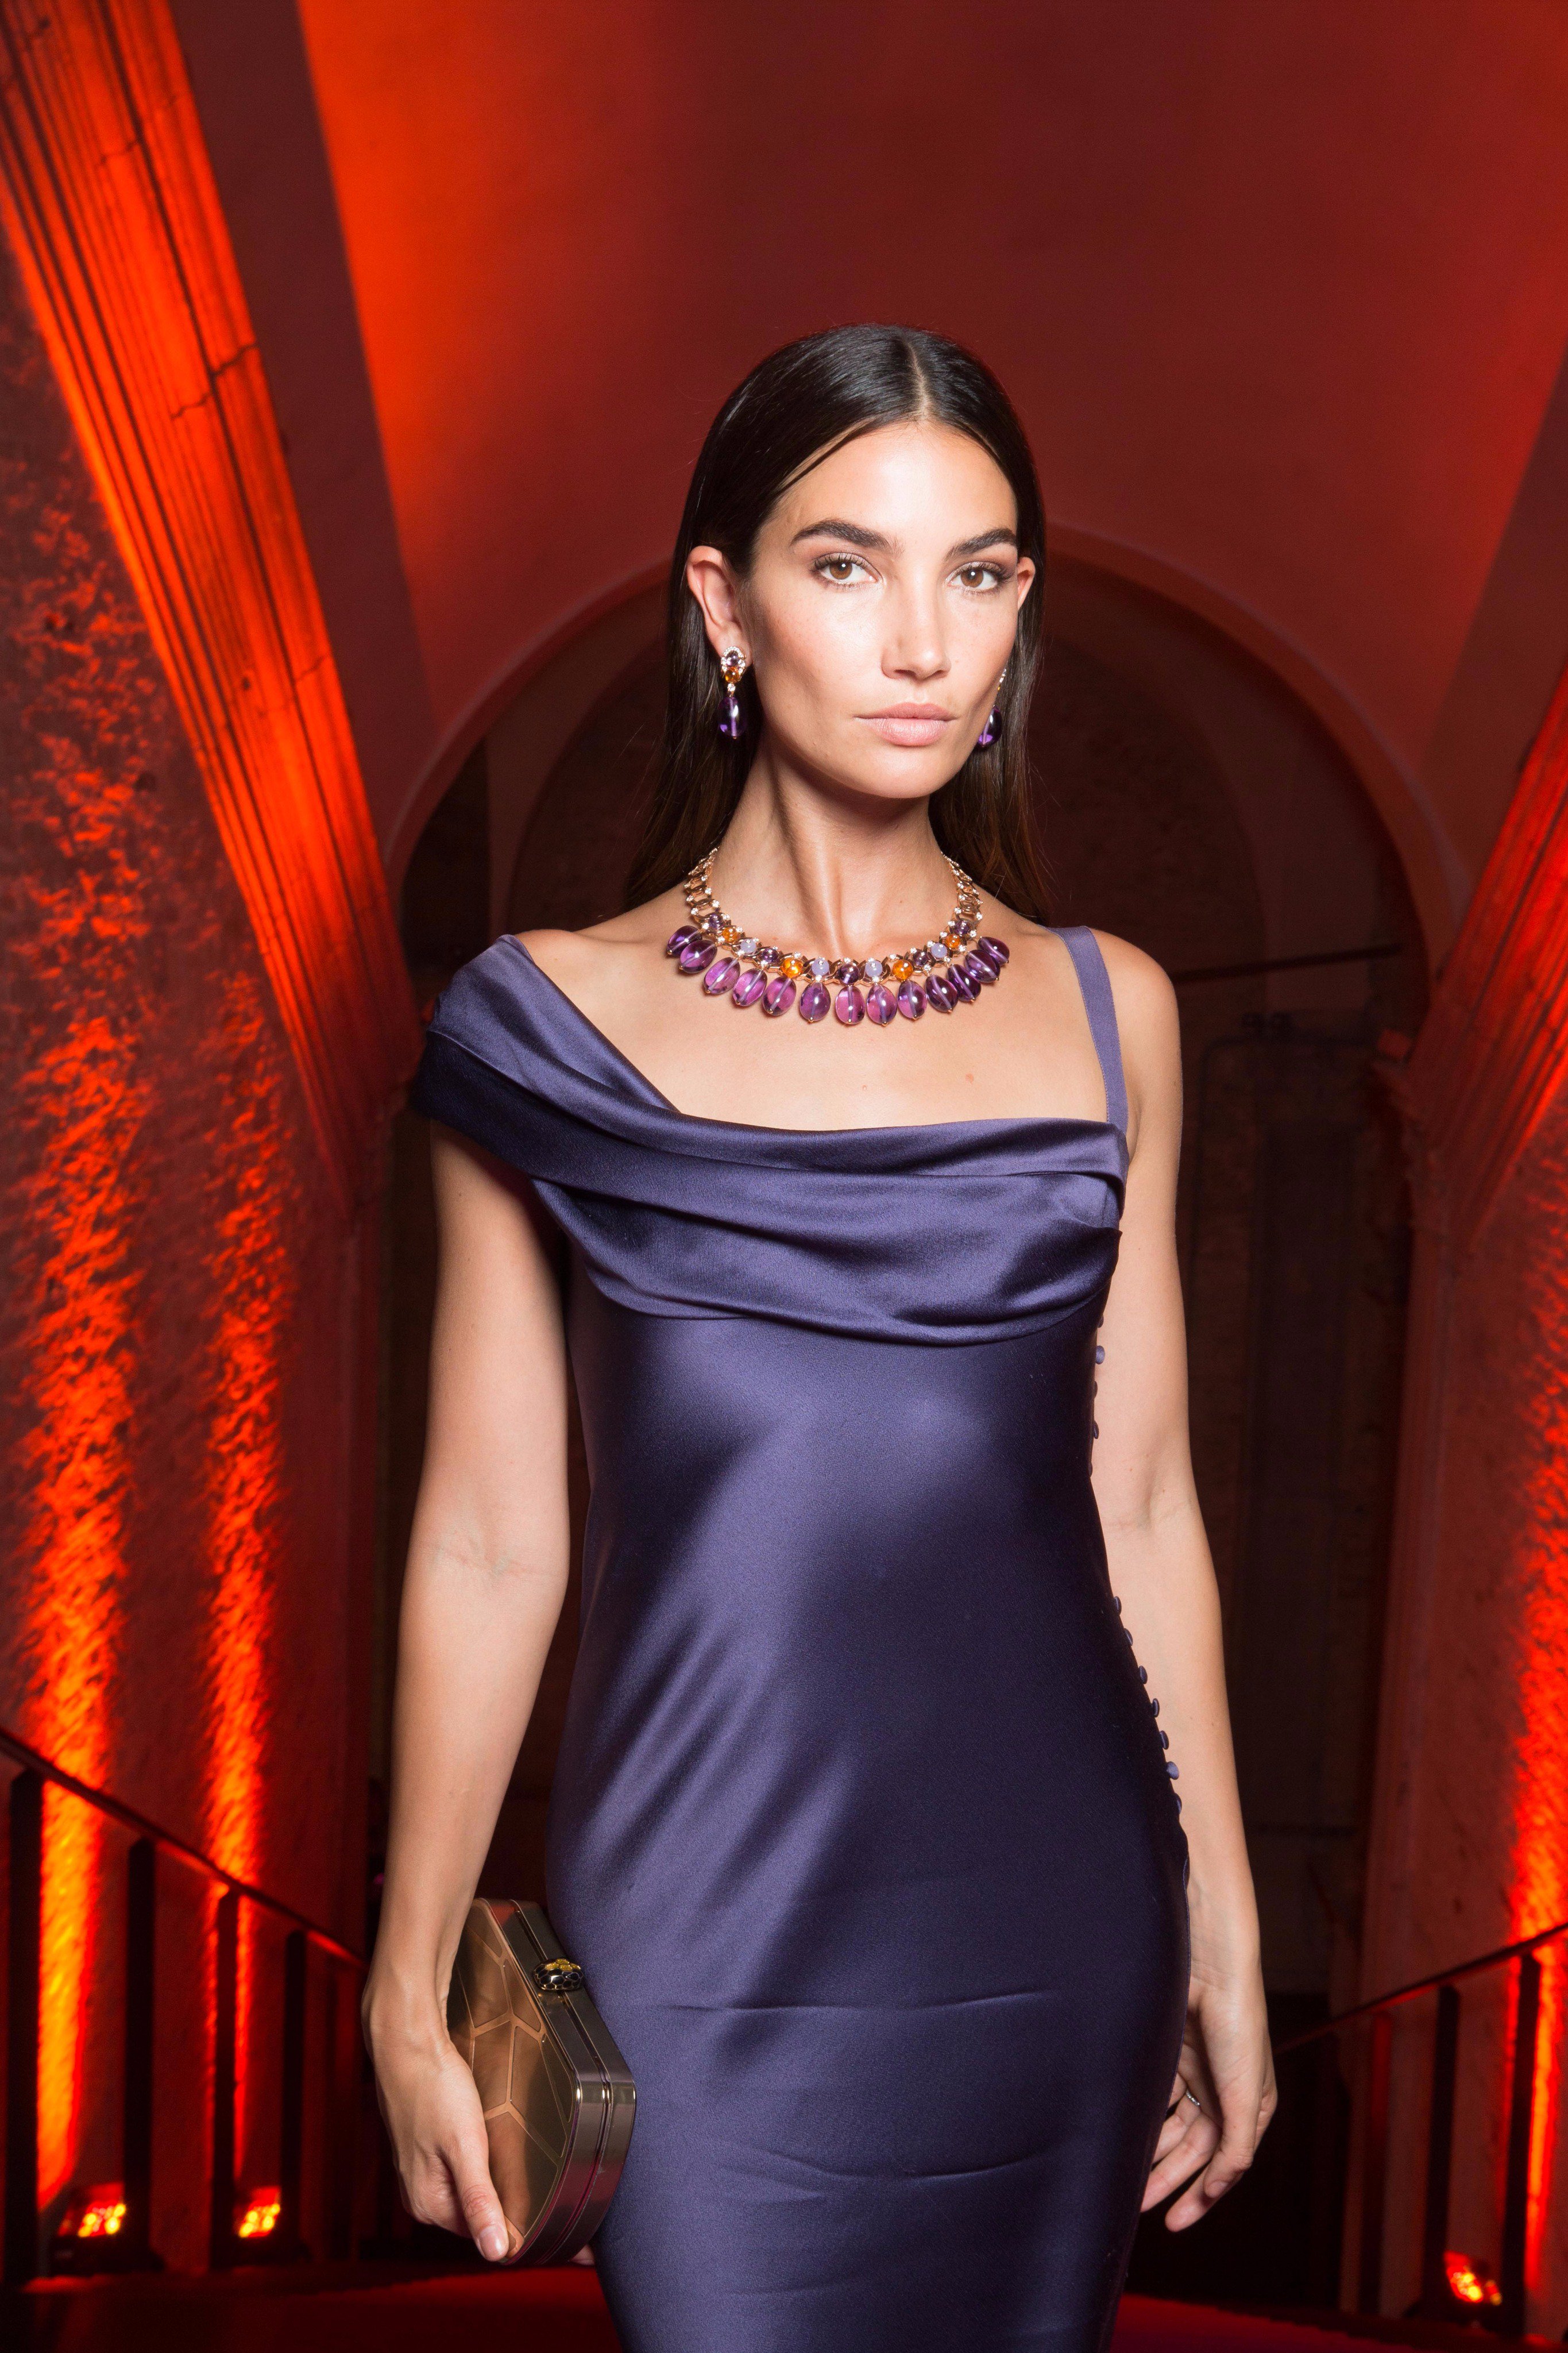 Louis Vuitton: Louis Vuitton Presents Its New High Jewellery